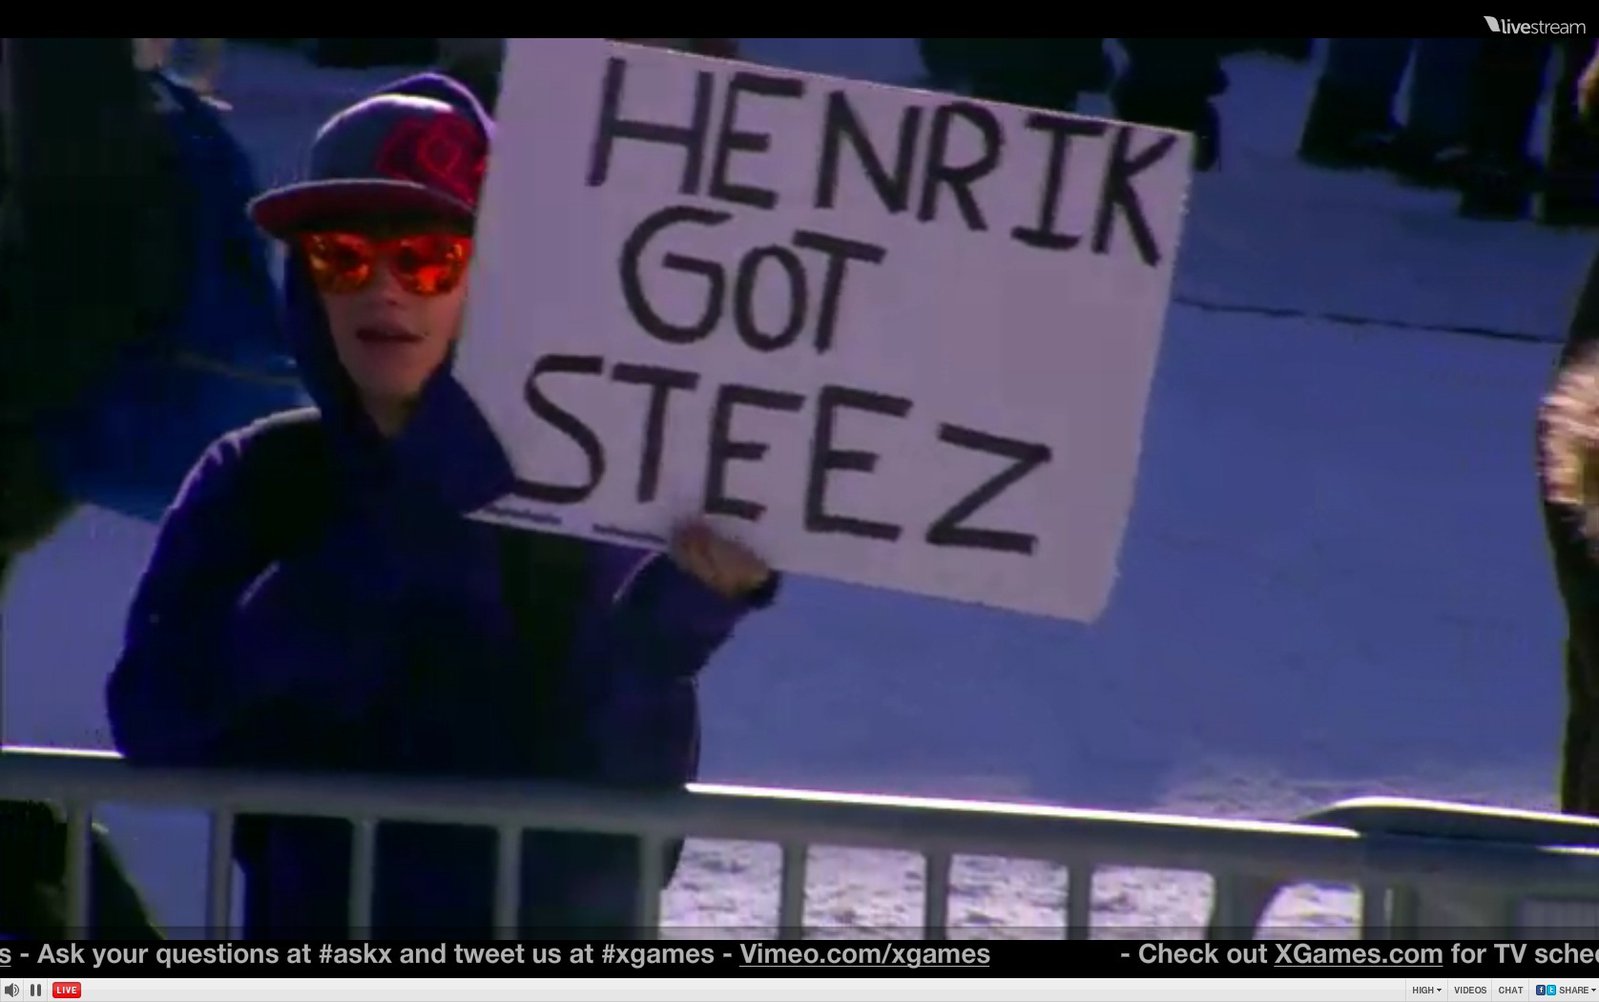 Henrik Got Steez